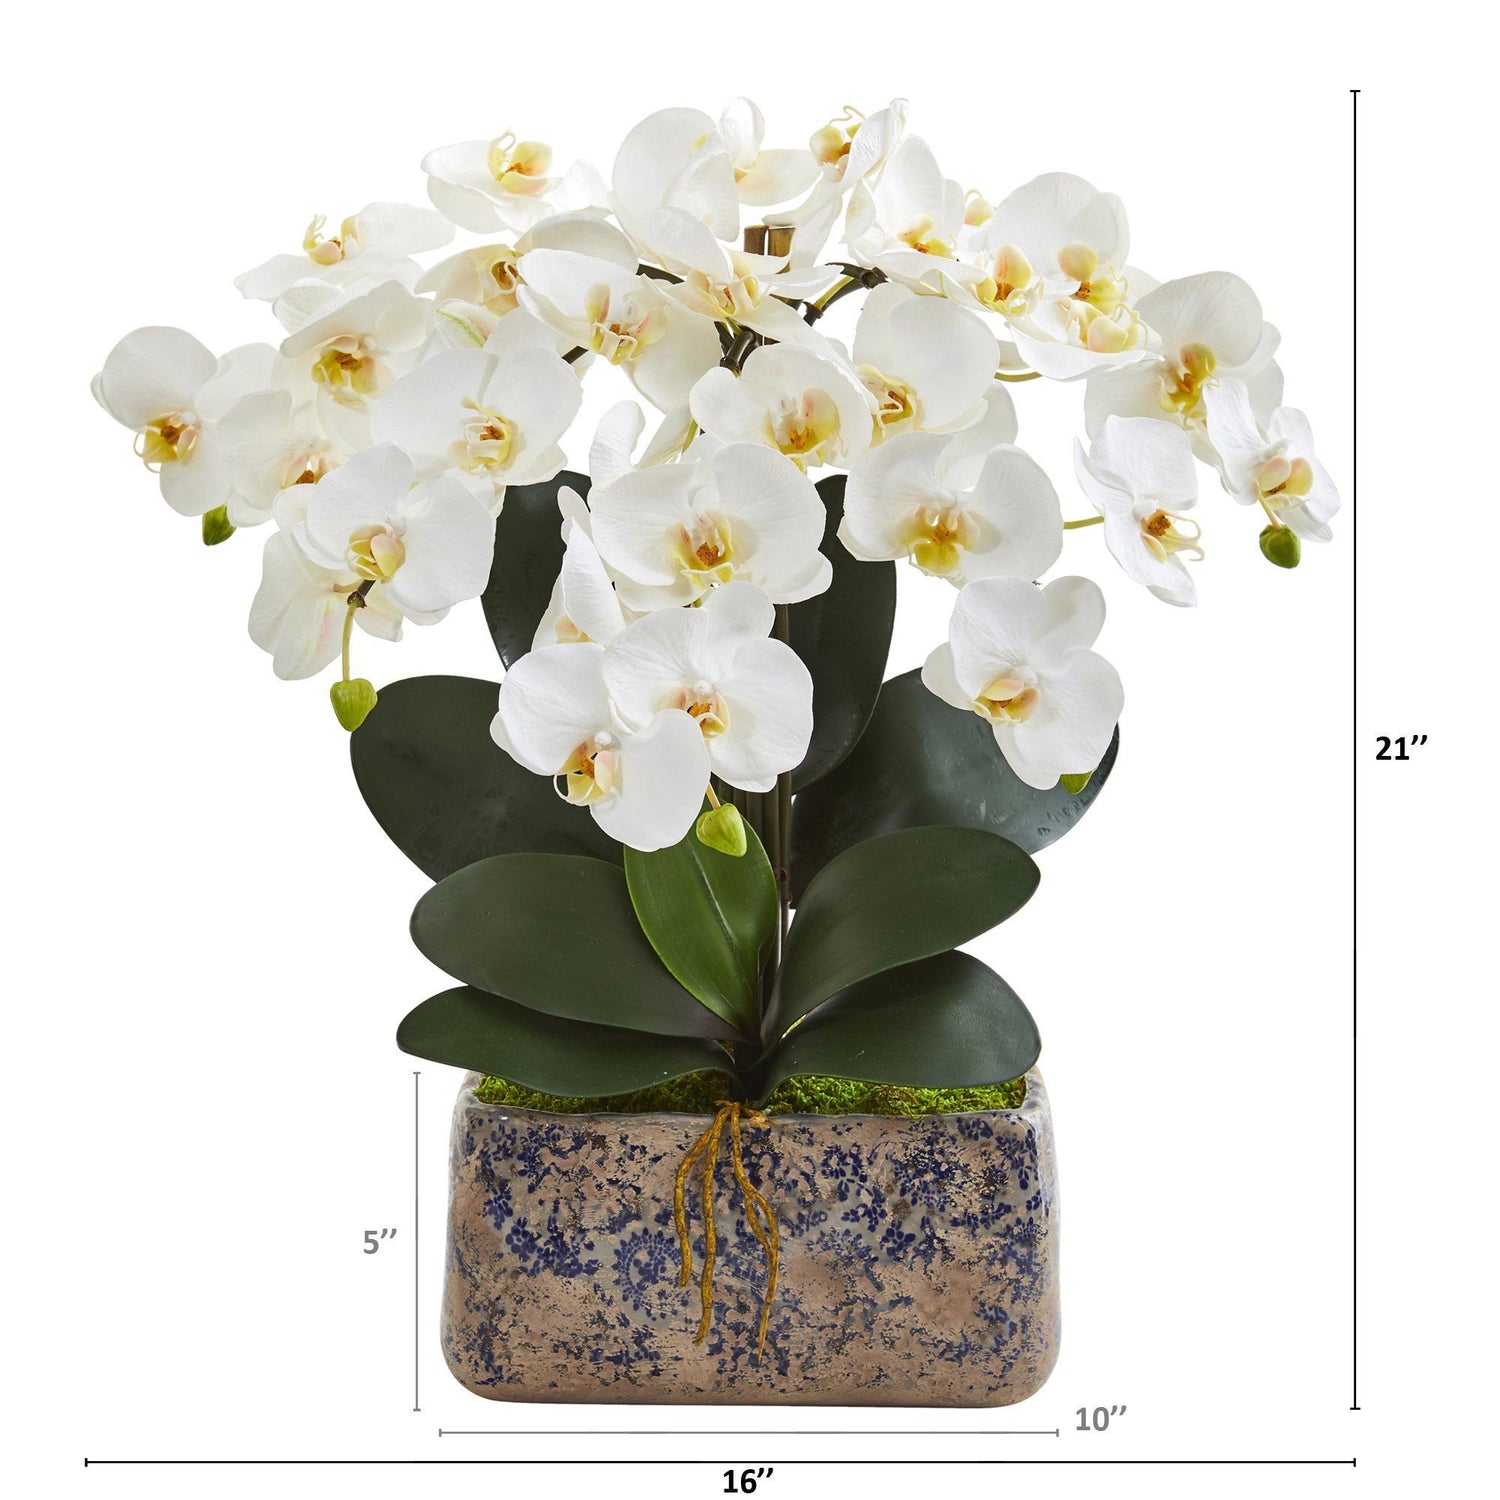 21” Phalaenopsis Orchid Artificial Arrangement in Vintage Vase